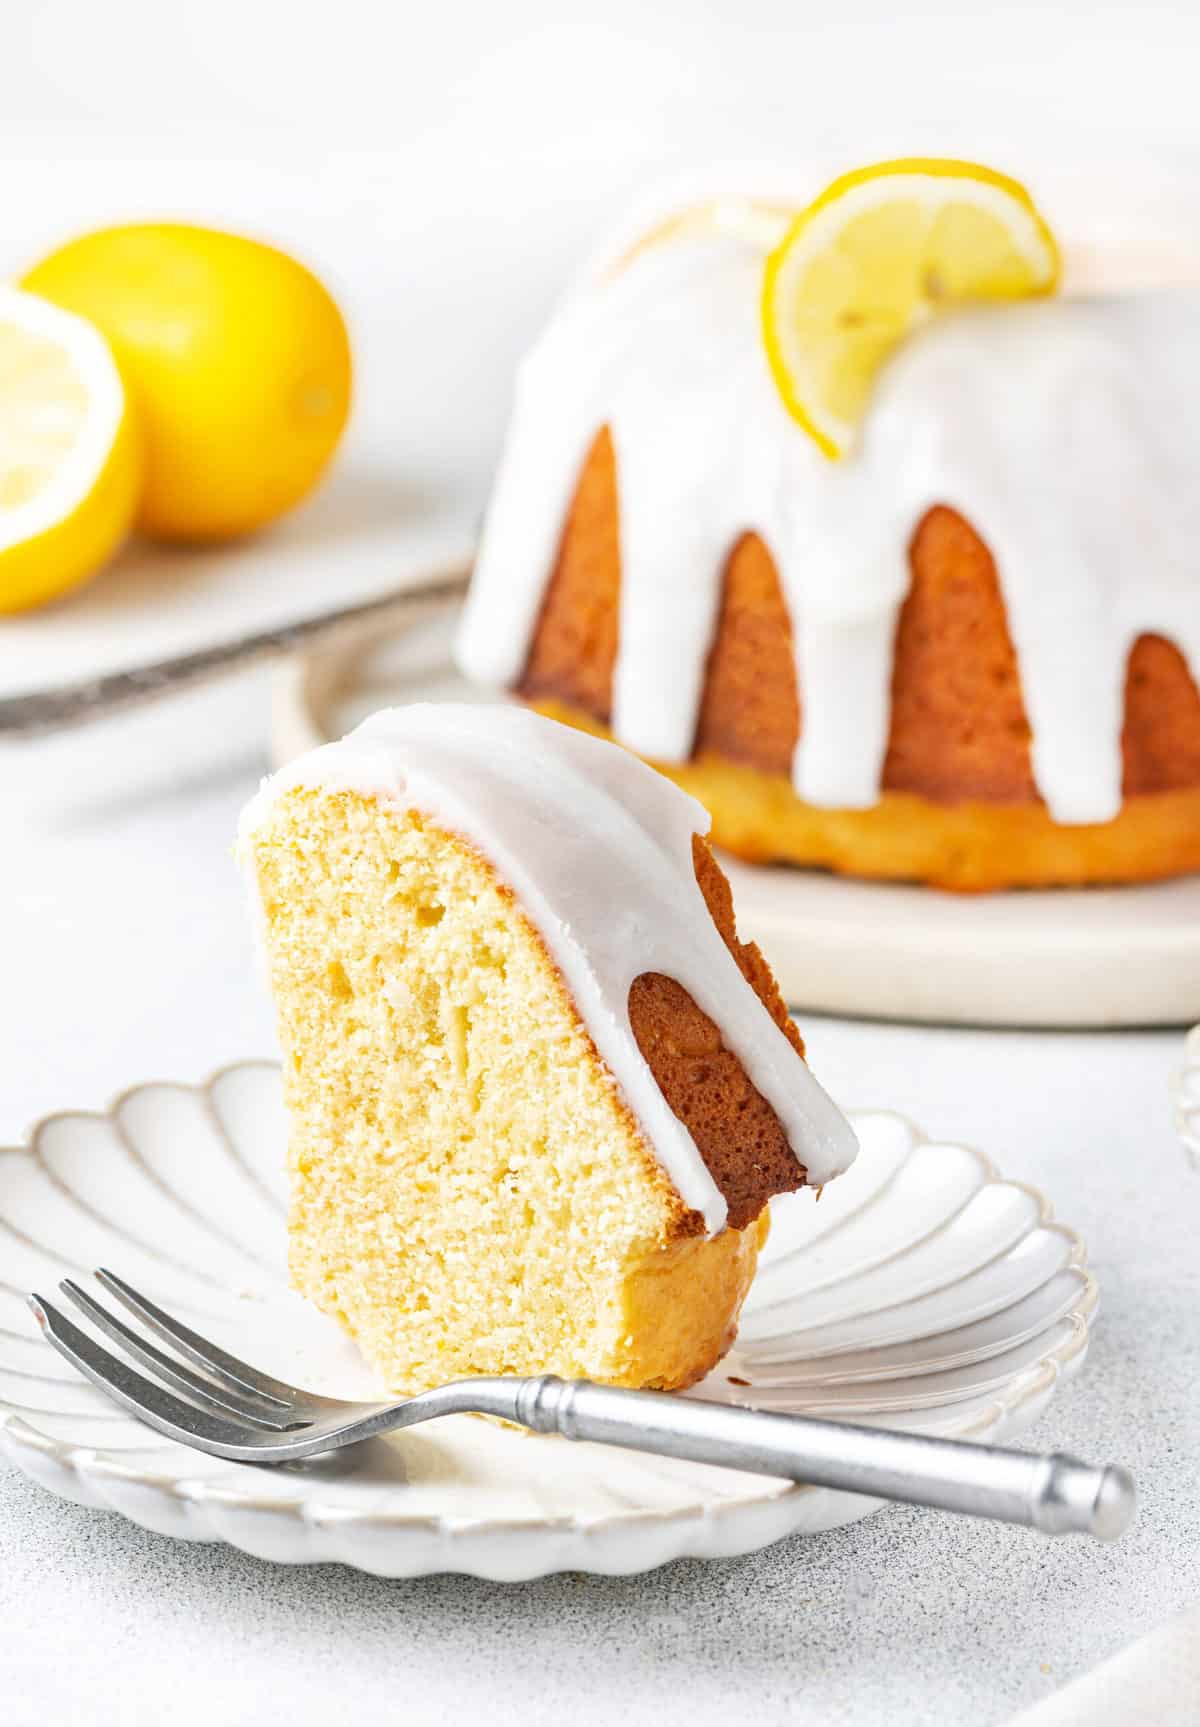 slice of lemon pound cake with lemon glaze served on a white plate with a silver fork